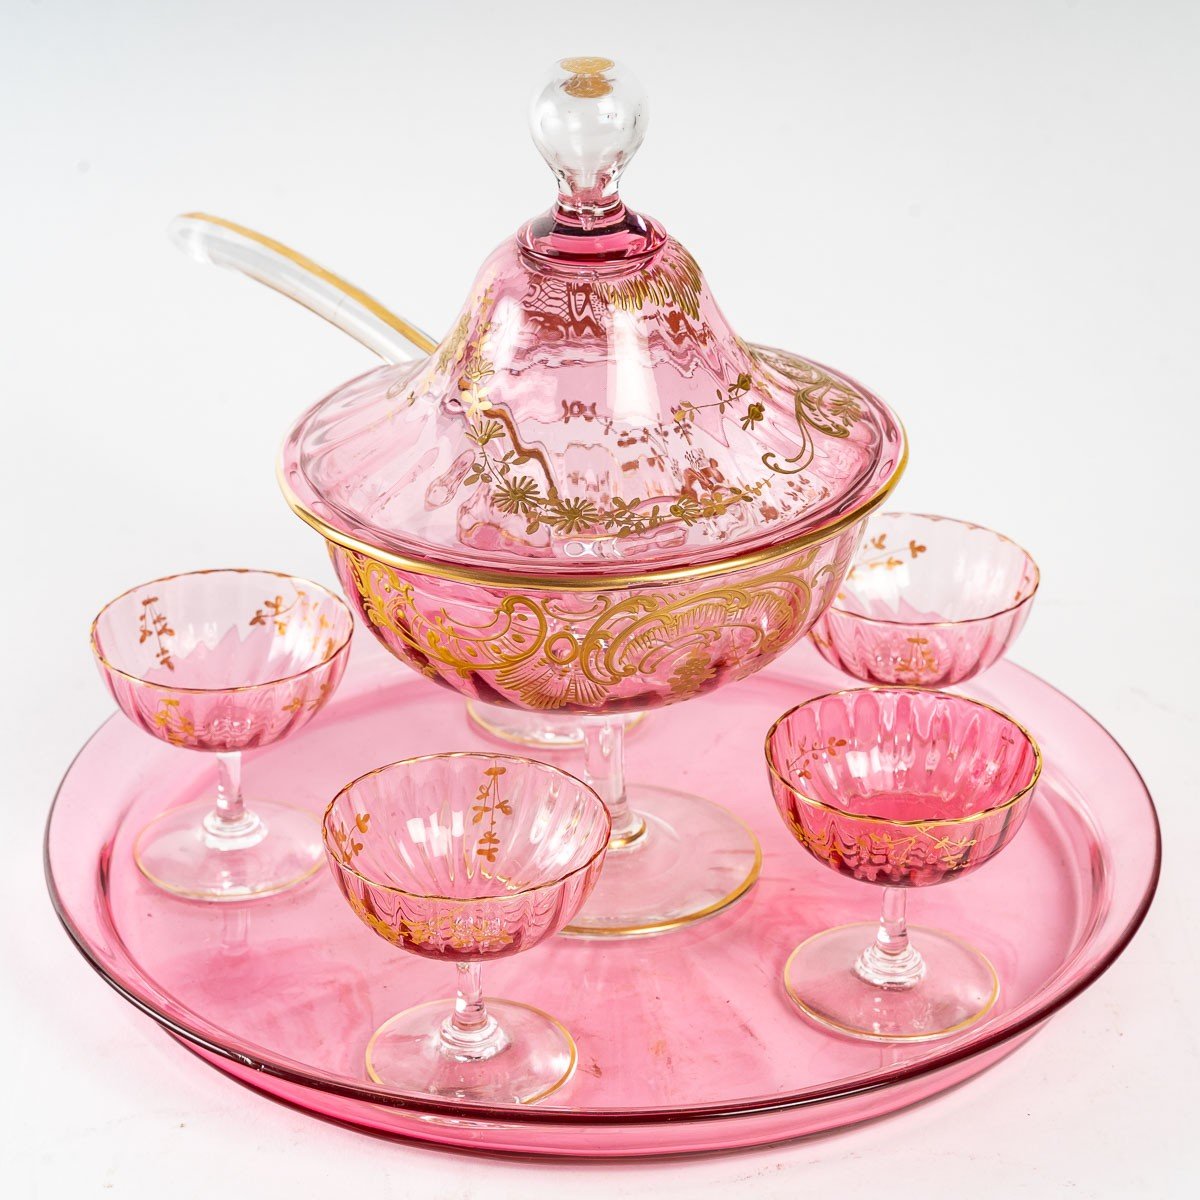 Splendid Table Service In Pink Crystal, XIXth Century